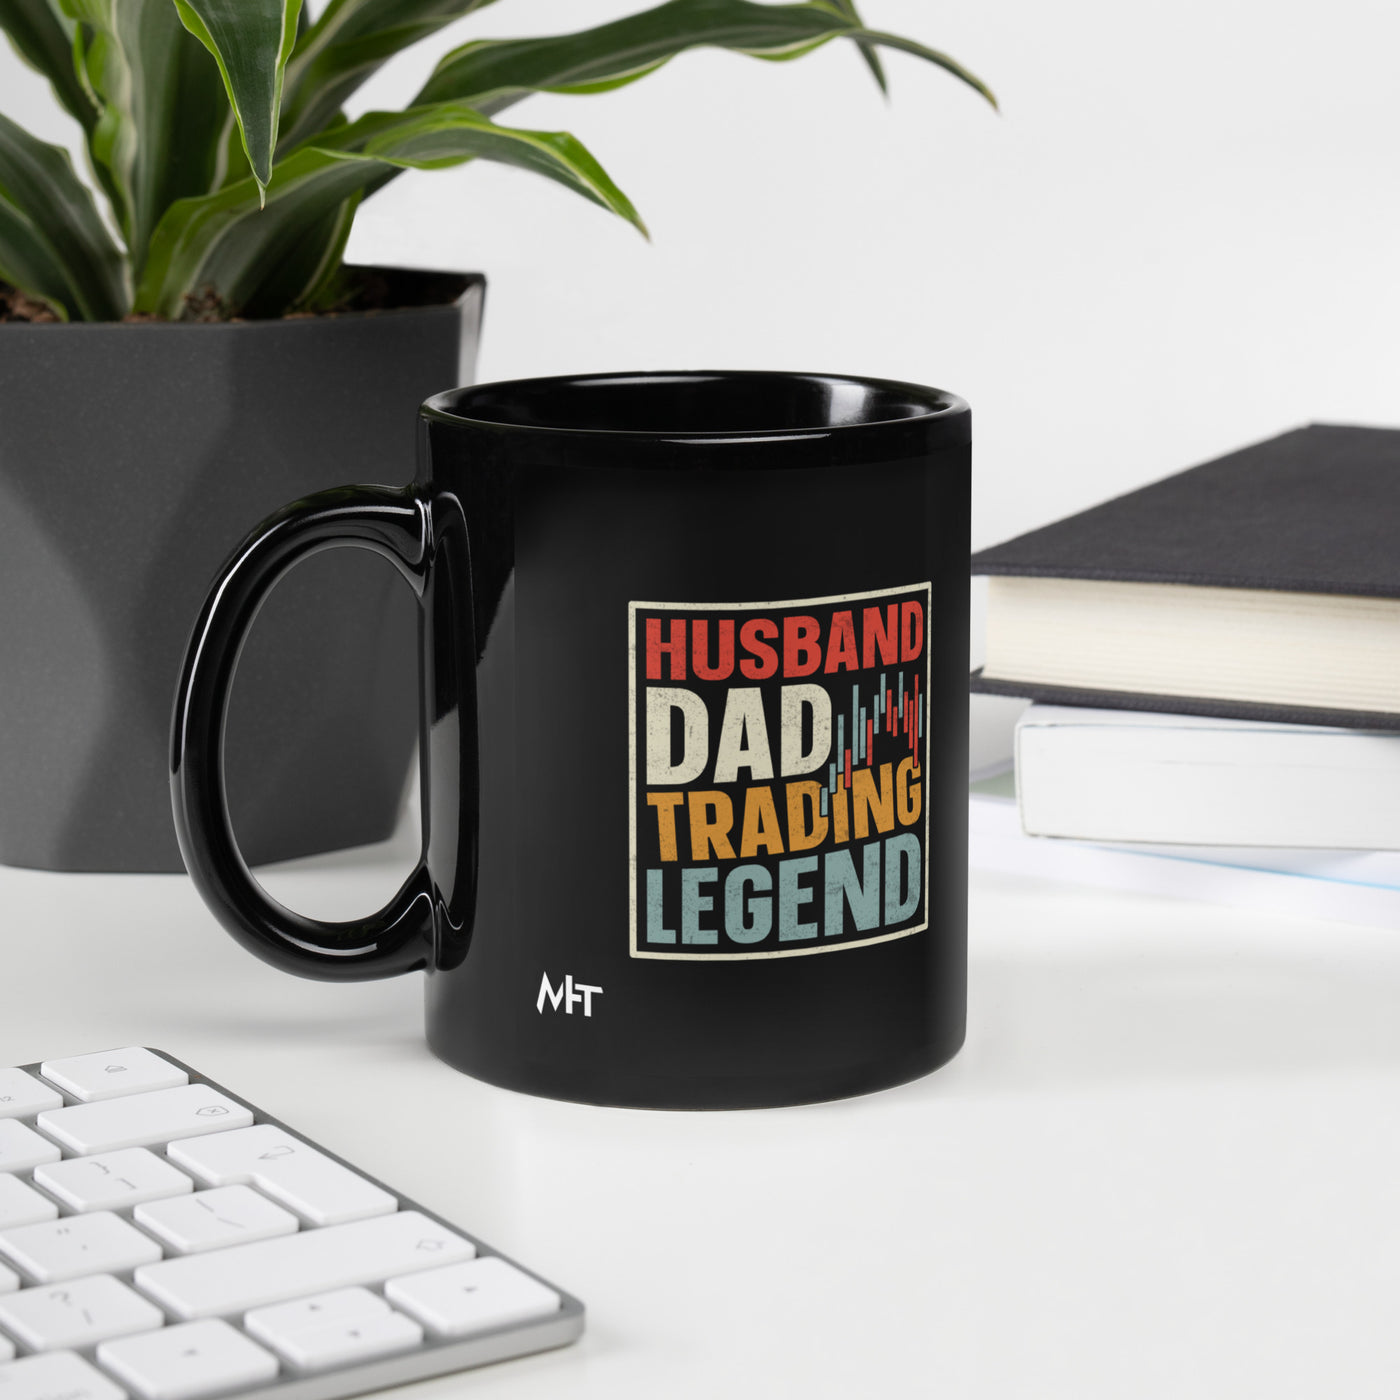 Husband, Dad, Trading Legend - Black Glossy Mug